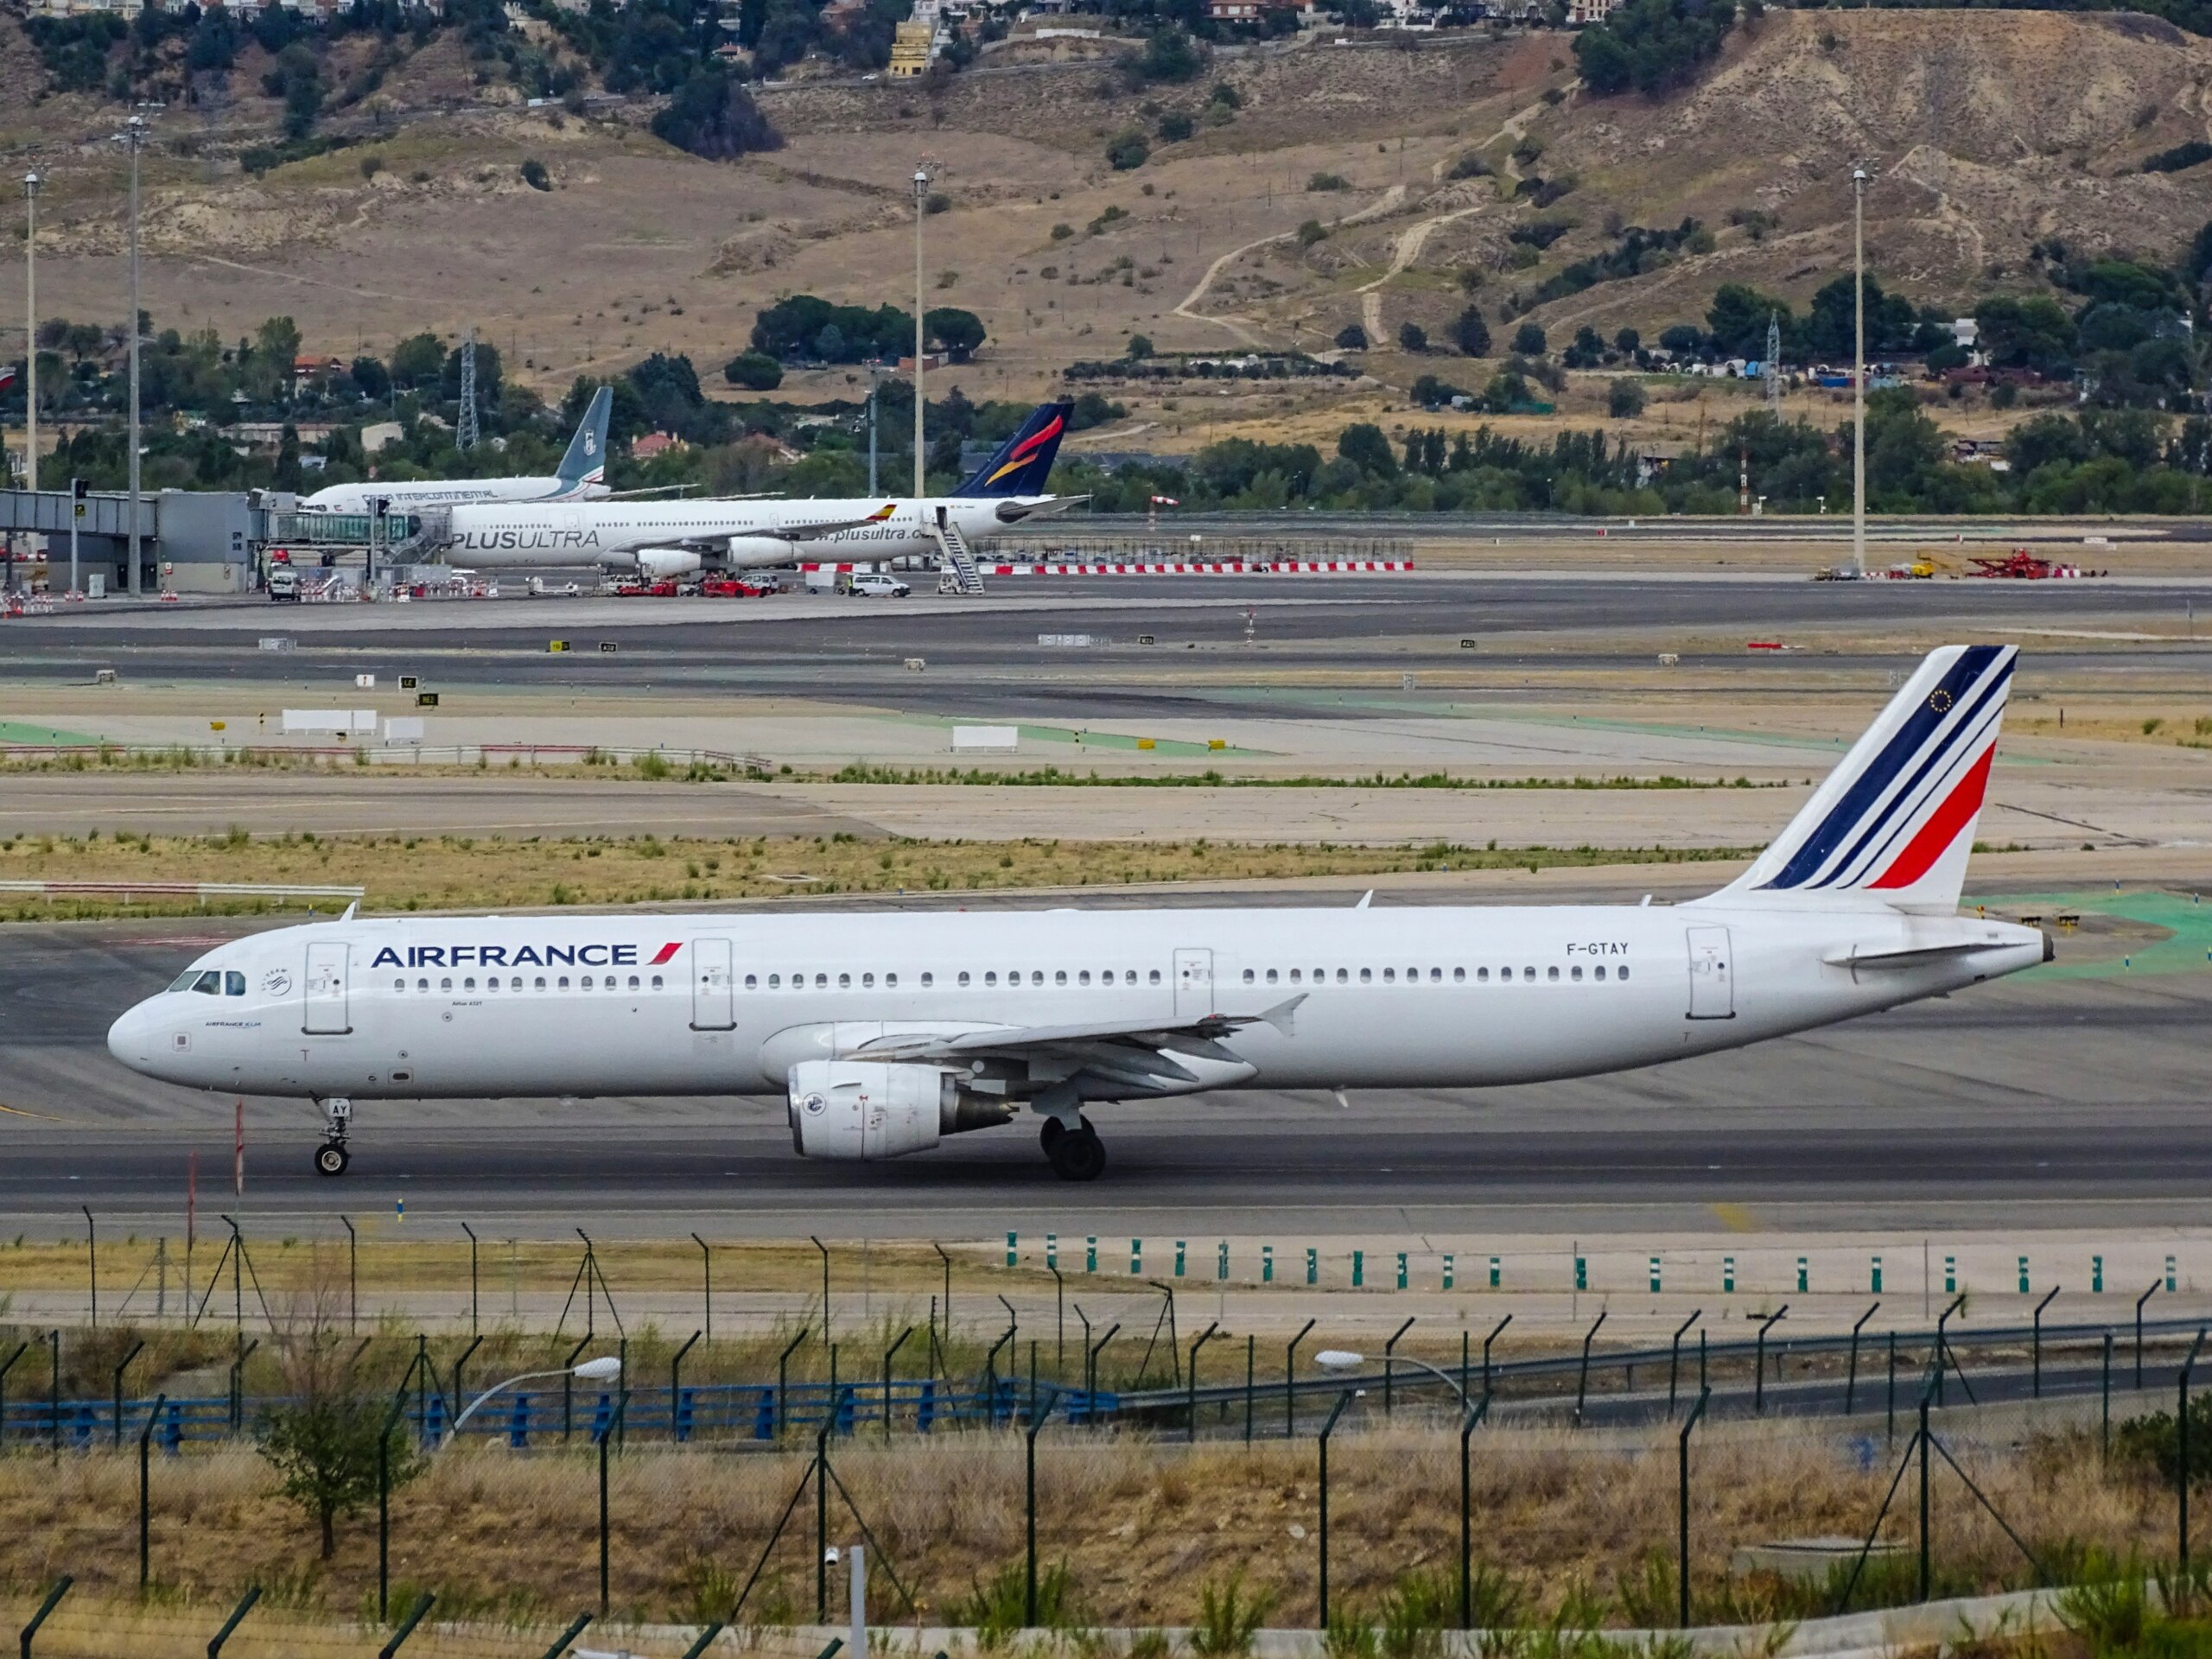 Air France airplanes